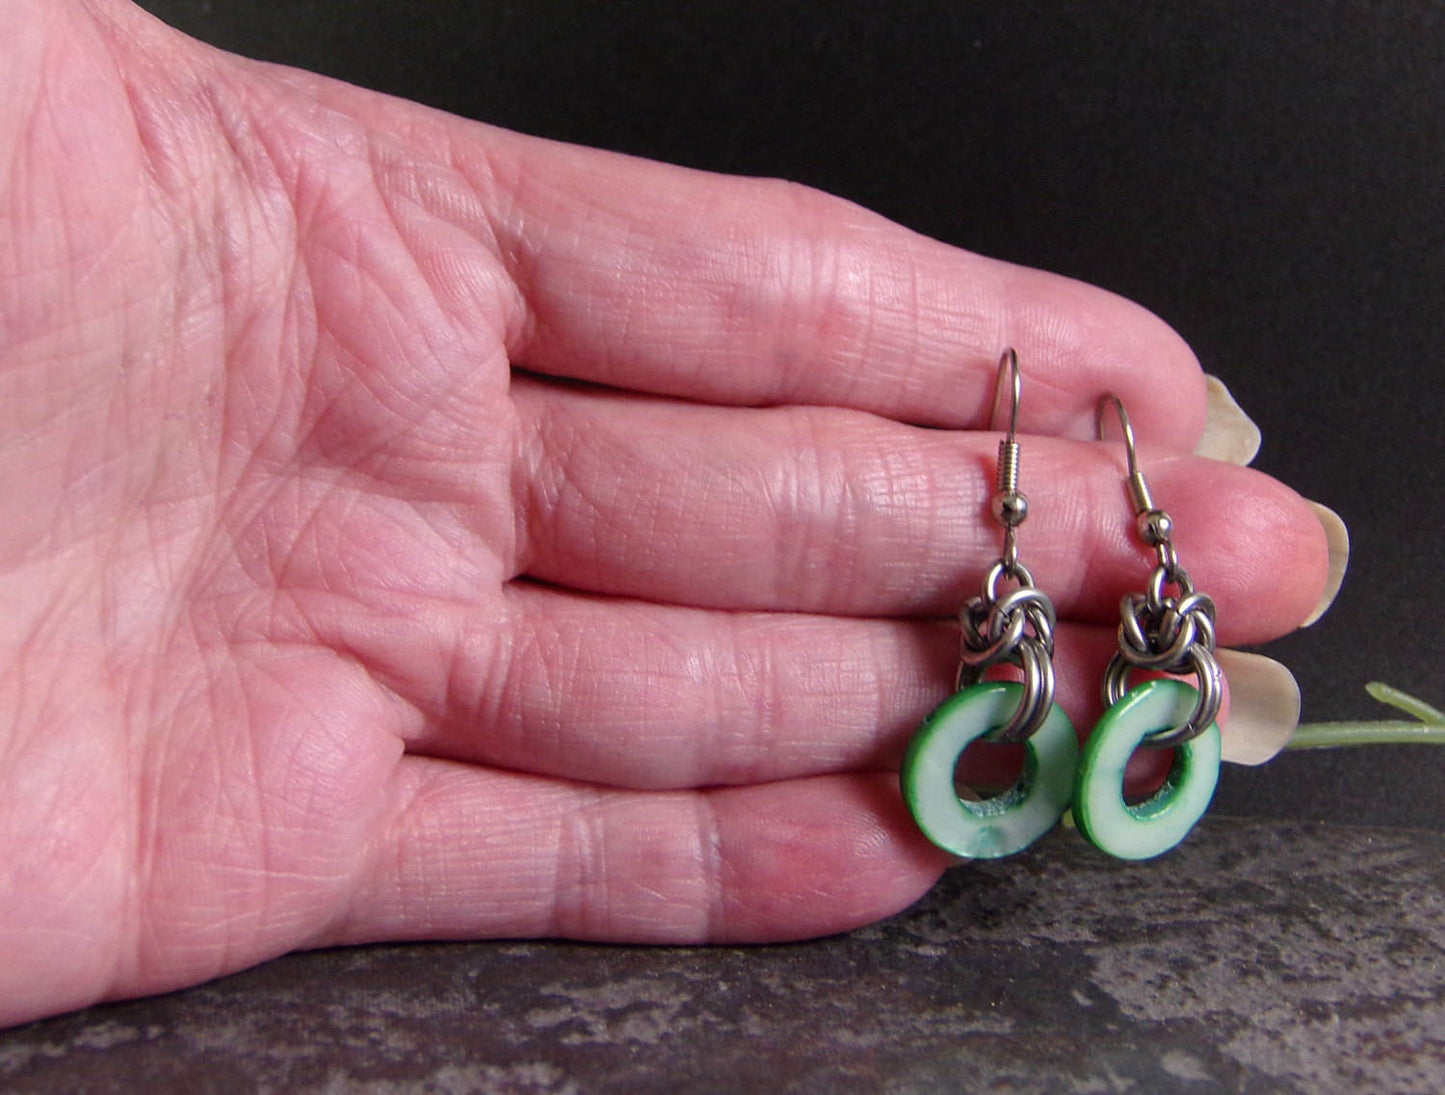 Stainless Steel Chainmaille Earrings - Rocker Earrings - Stainless steel and Green shell Earrings - Earrings for Teens - Edgy Earrings